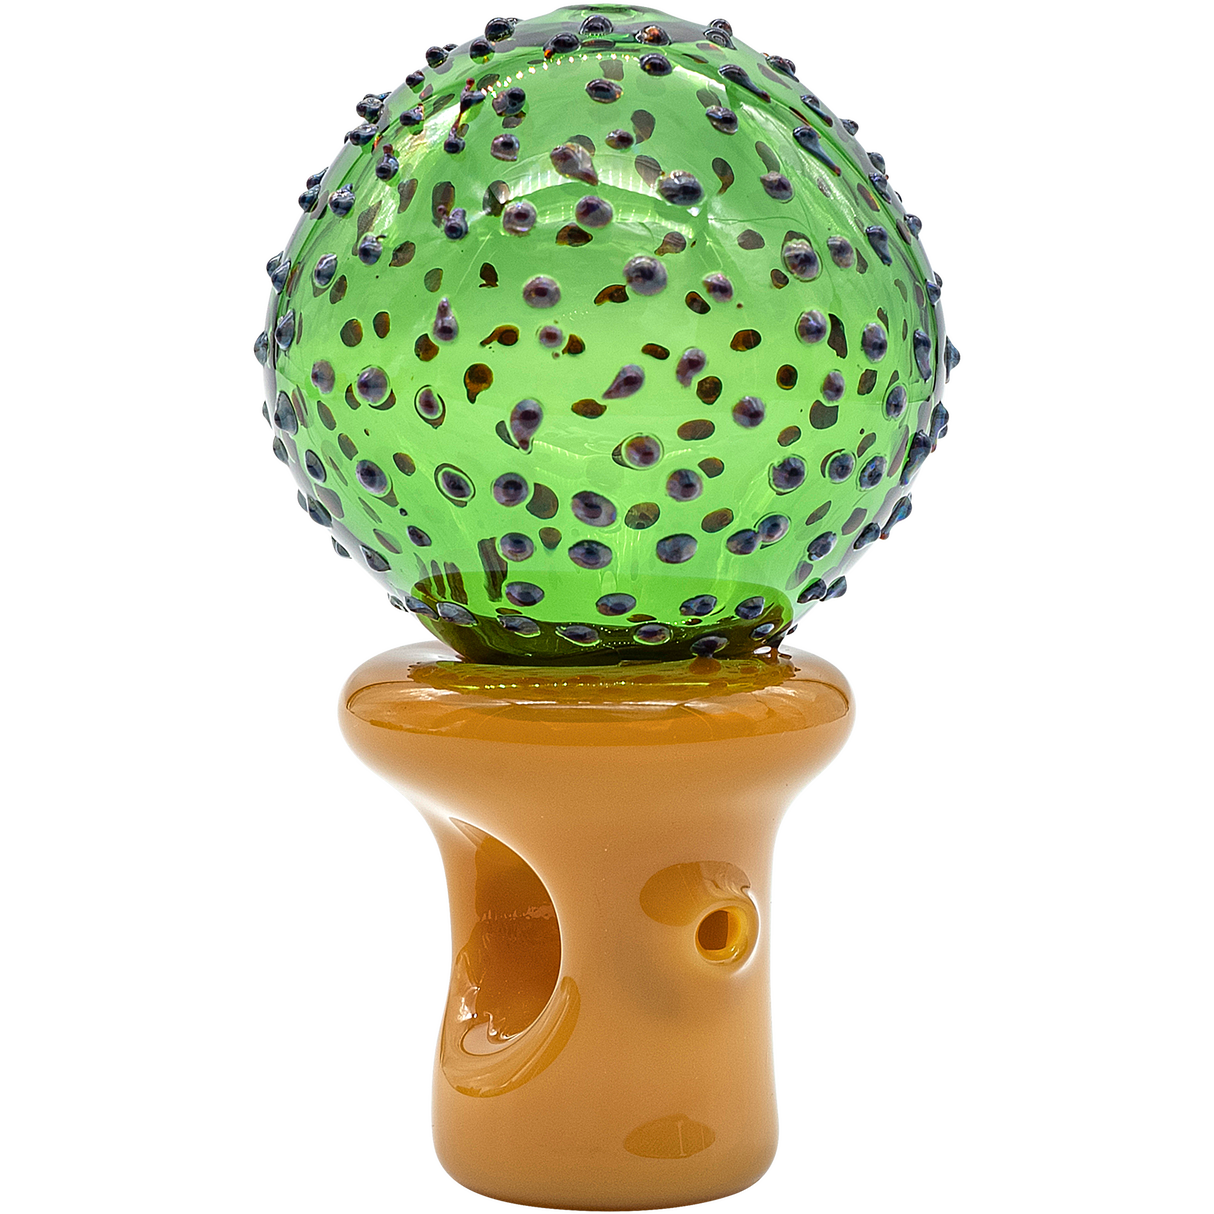 LA Pipes Peyote Cactus Glass Pipe for Dry Herbs, 4" Borosilicate Spoon Design